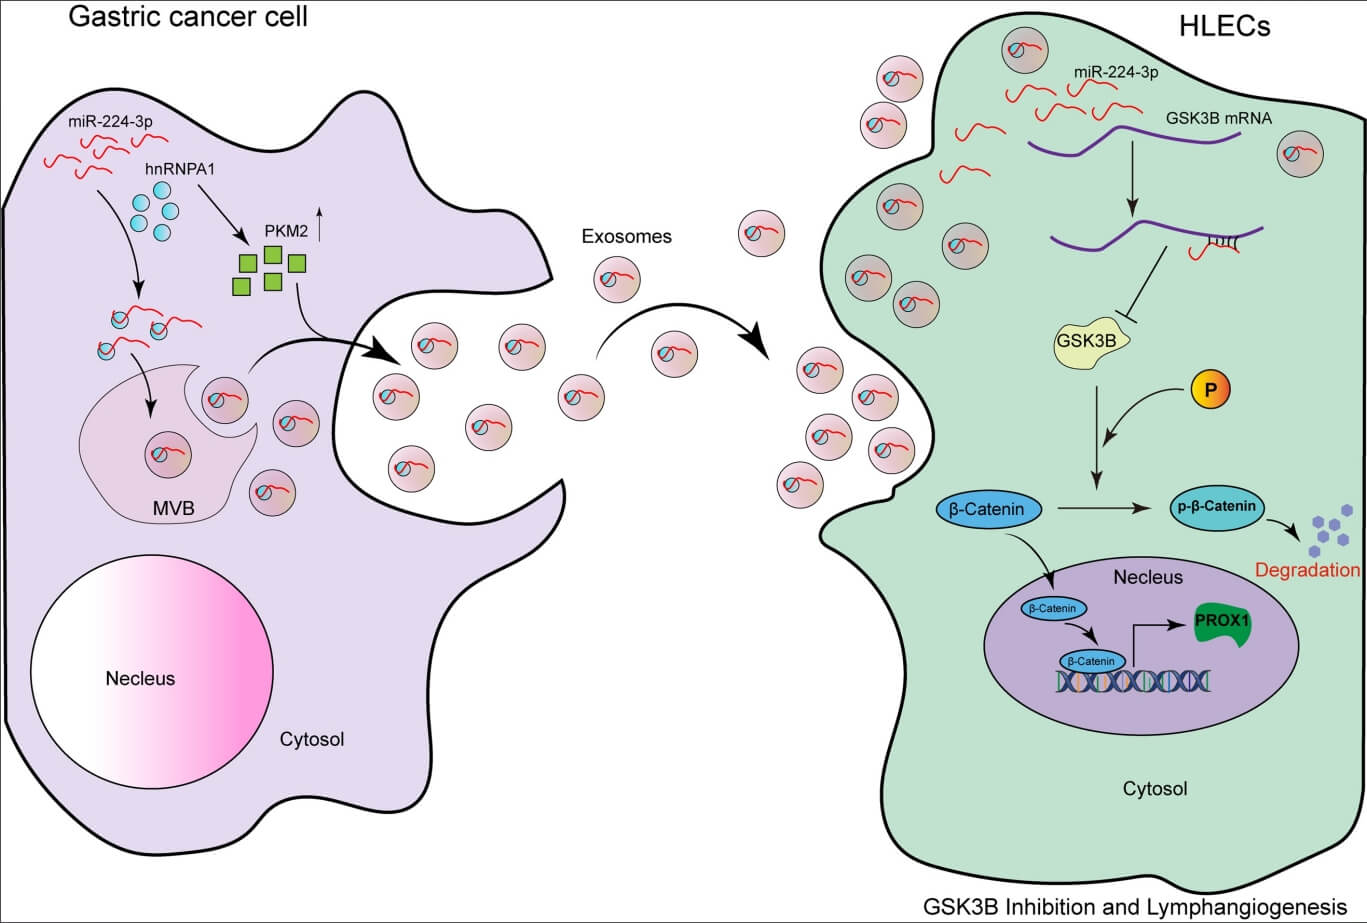 Exosomal miR-224-3p promotes lymphangiogenesis and lymph node metastasis by targeting GSK3B in gastric cancer